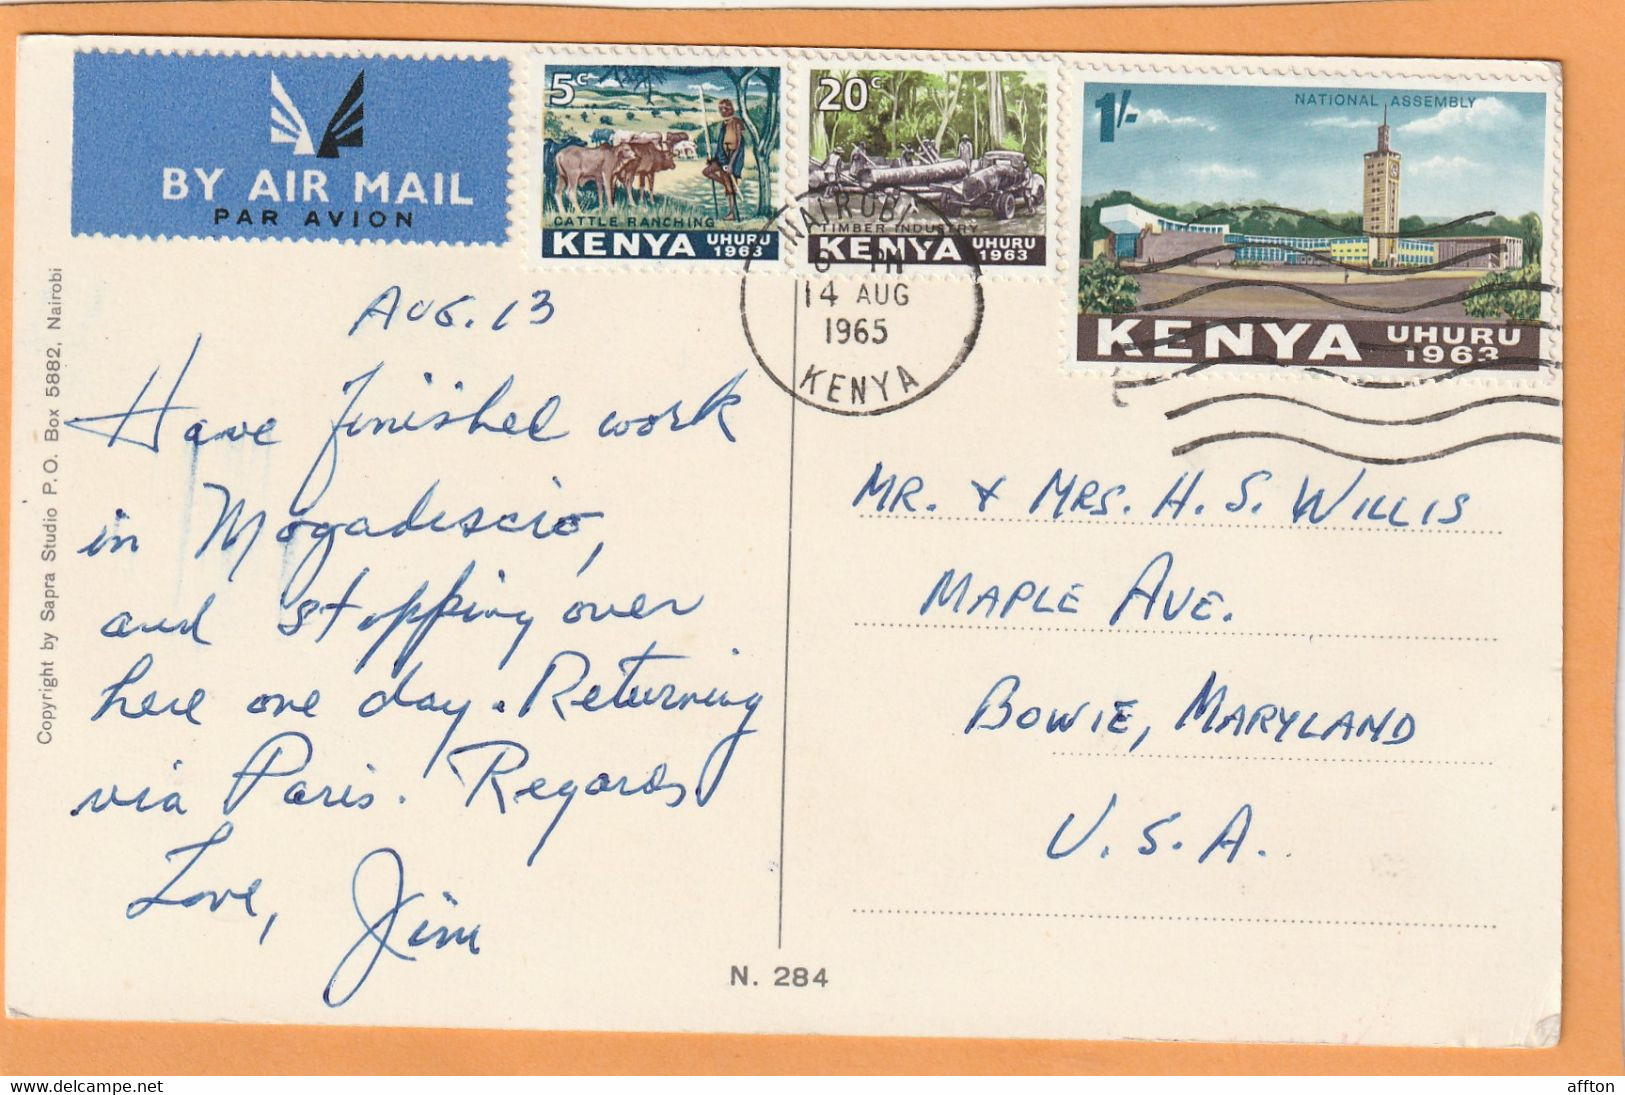 Kenya Old Postcard Mailed - Kenya